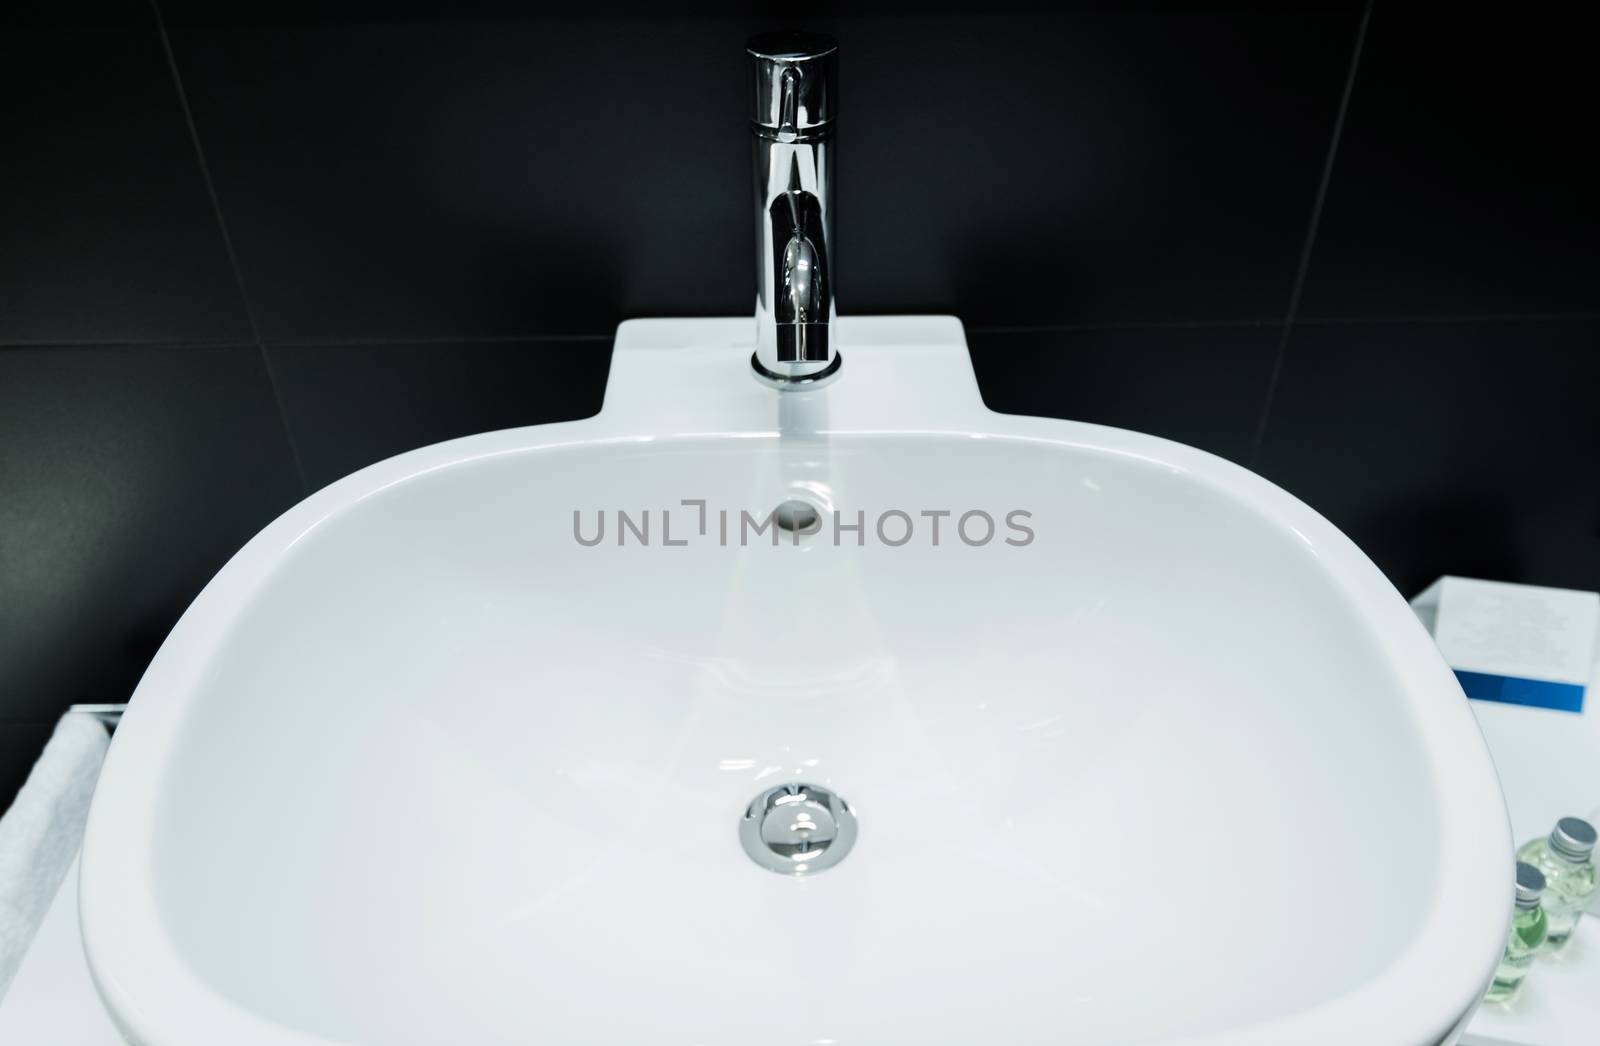 Modern Bathroom Bowl Sinks and Black Tiles Bathroom Interior Design.